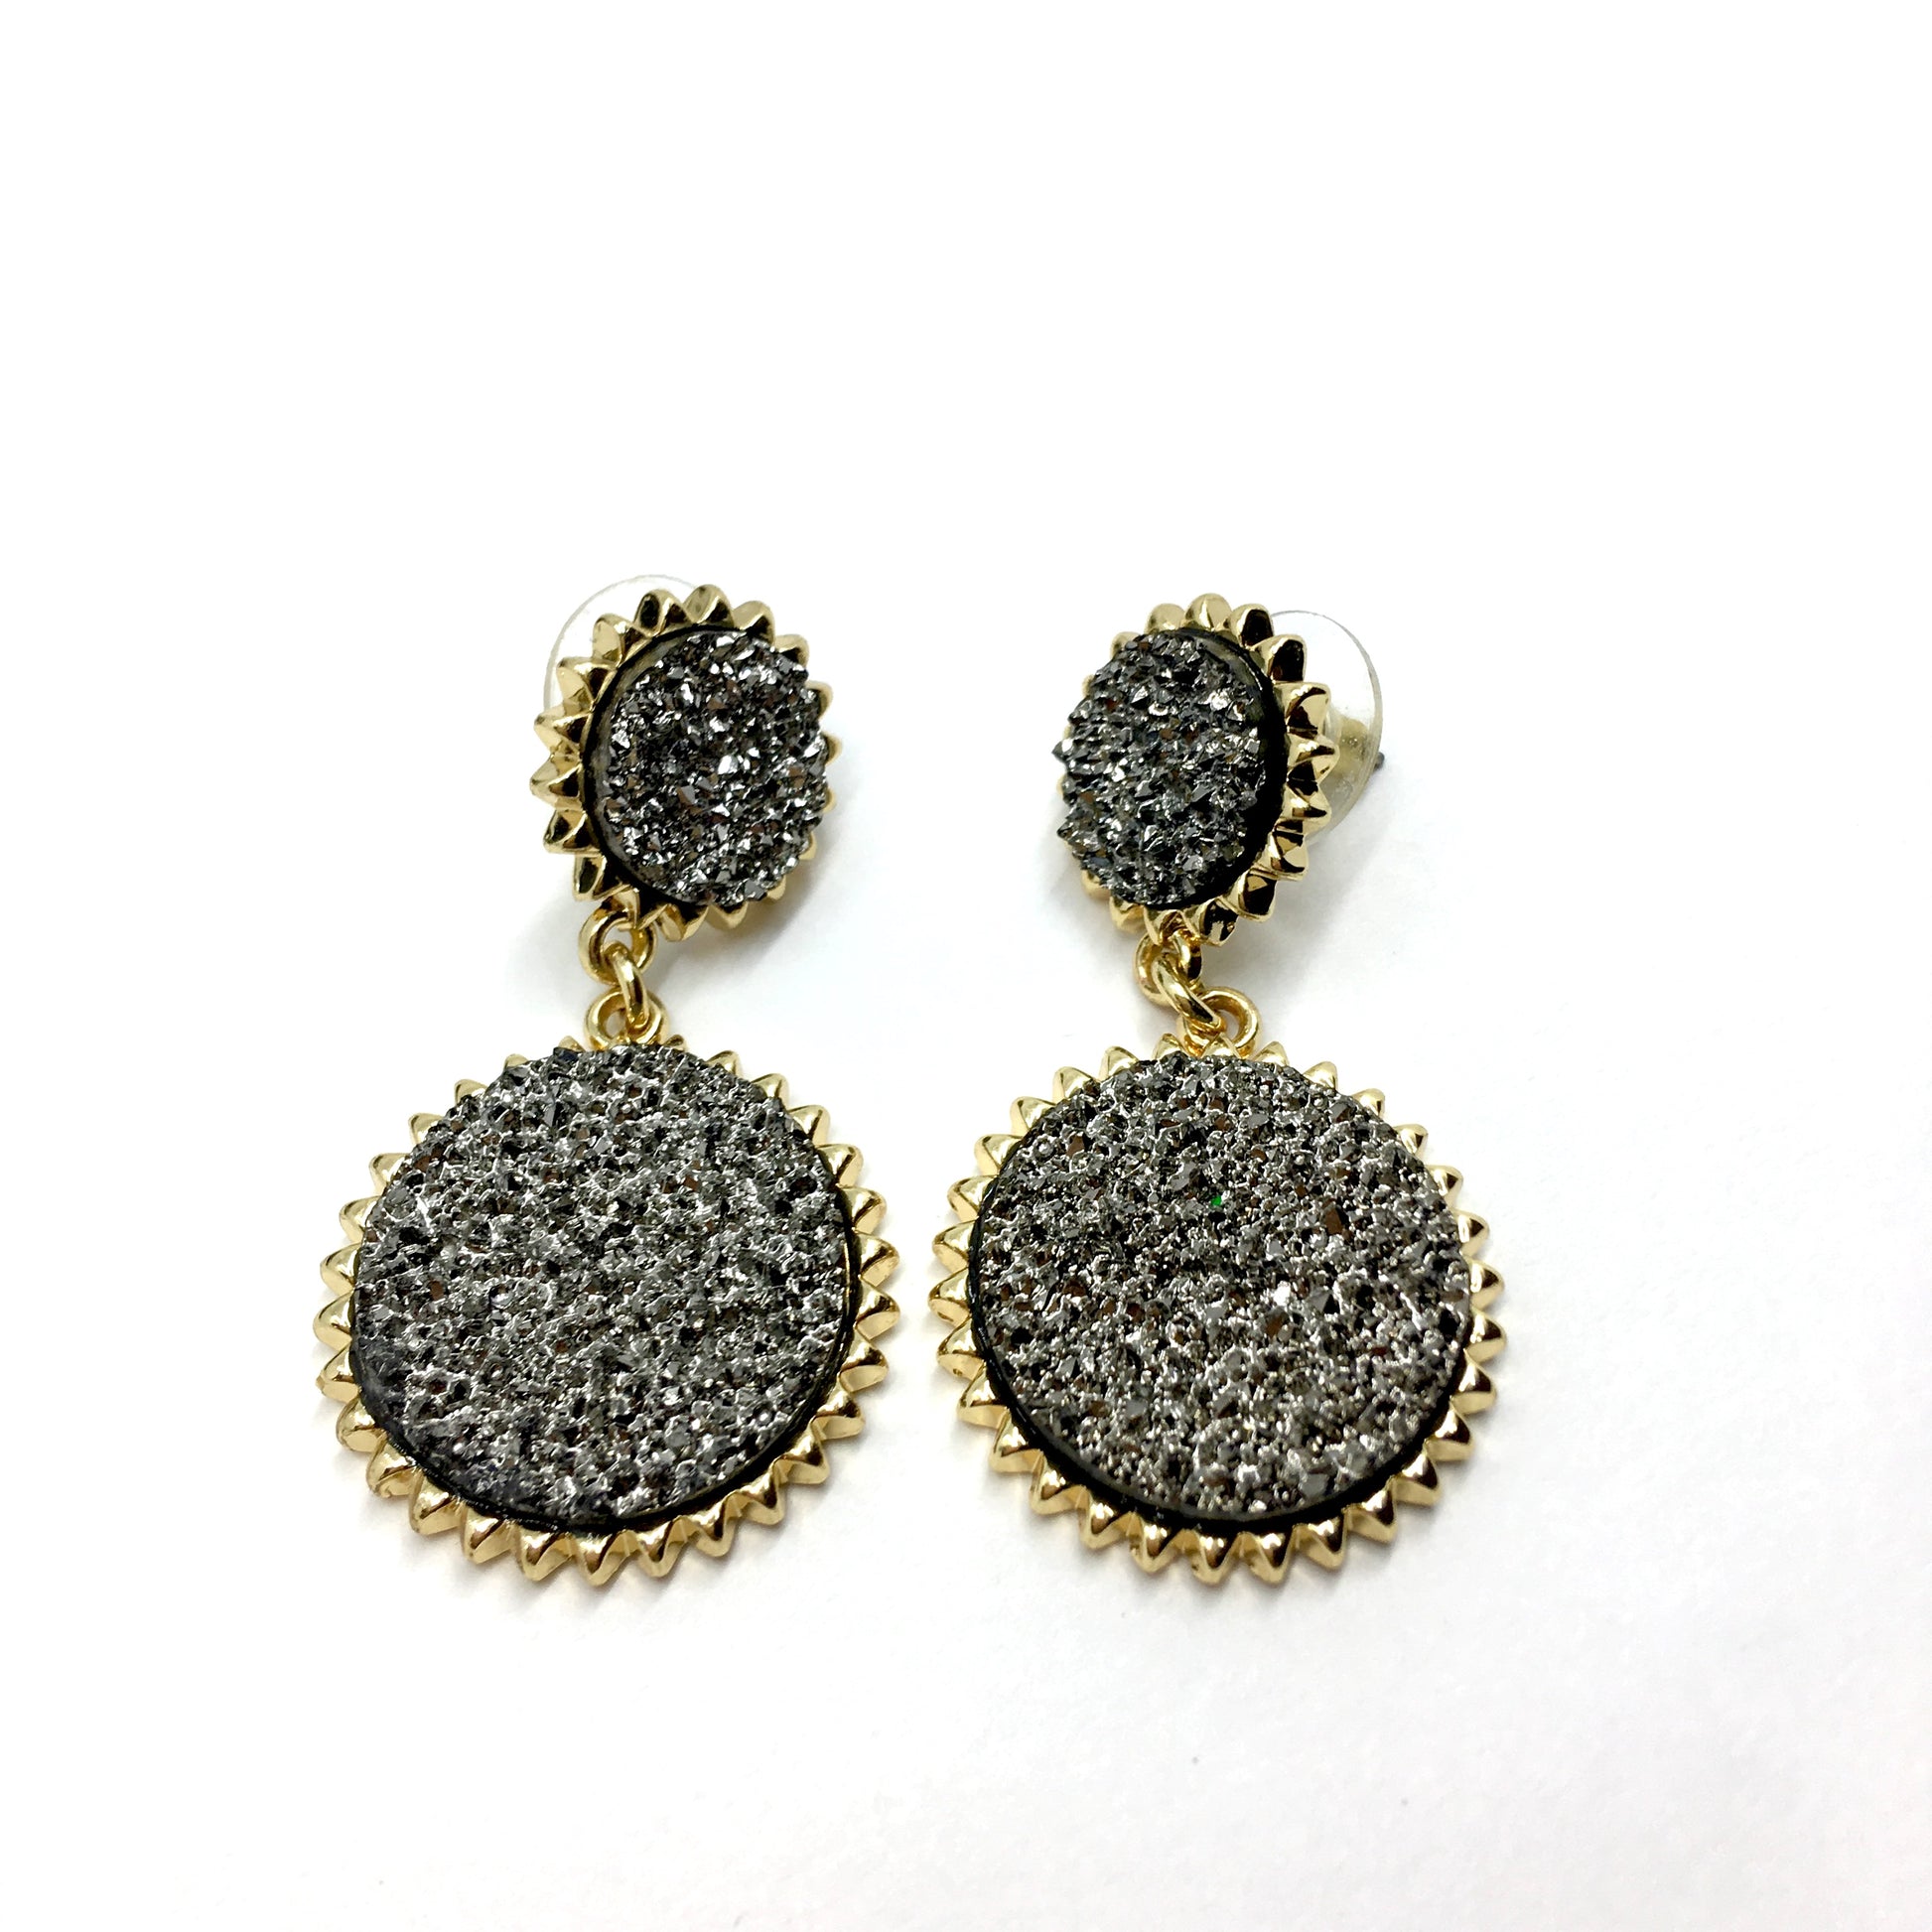 Fashion Jewelry - Edgy Flair Gold Metallic Black Druzy Circle Design Dangle Earrings